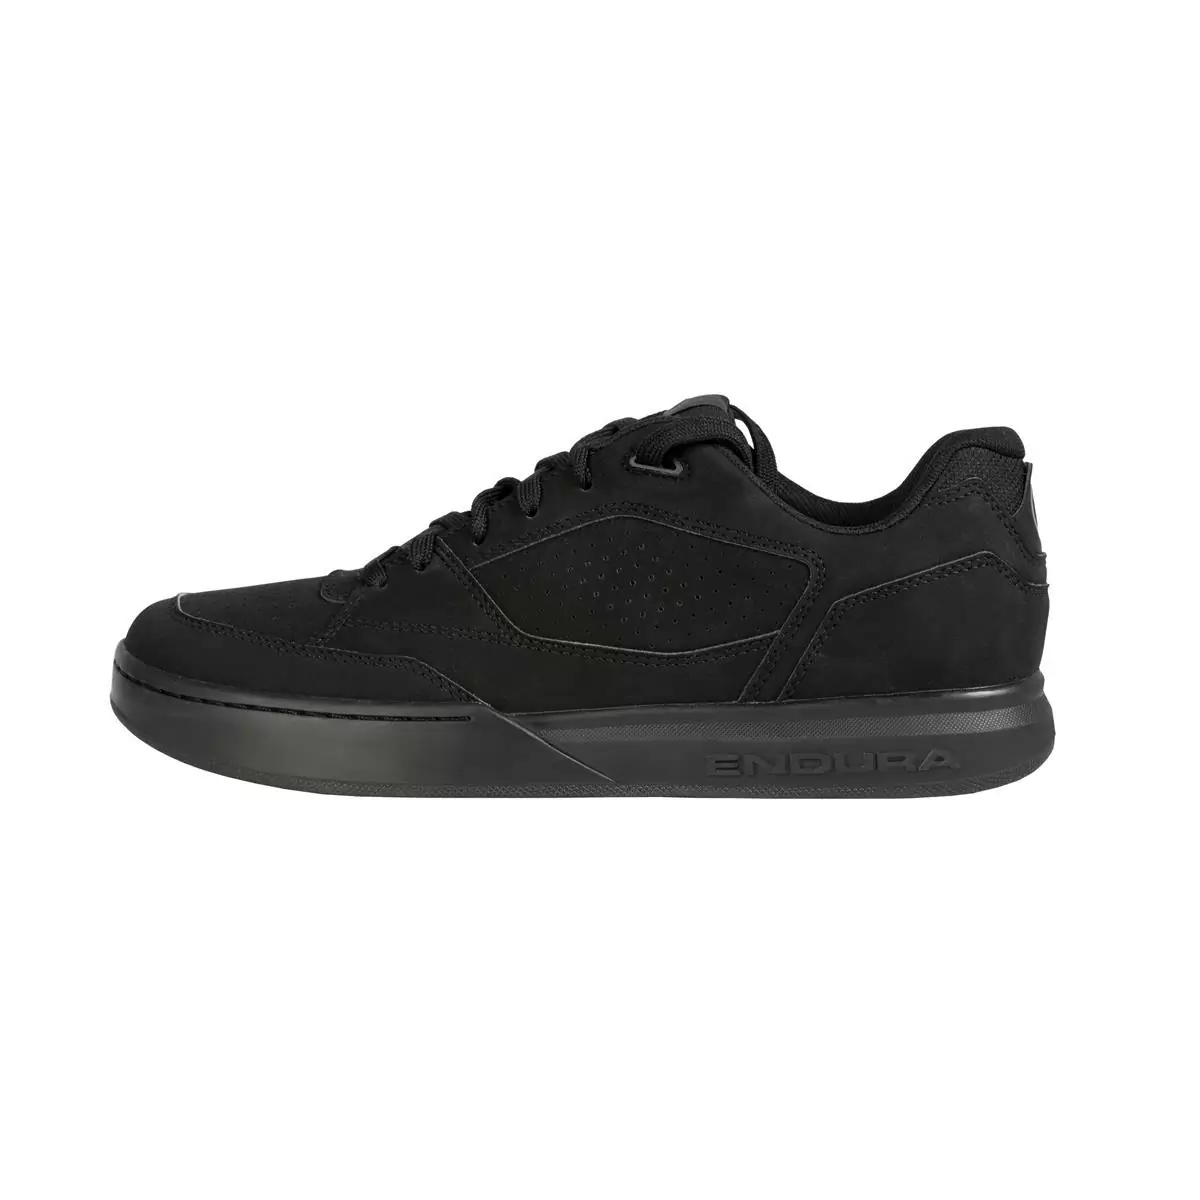 Hummvee Flat Pedal Shoes Black Size 45,5 #1